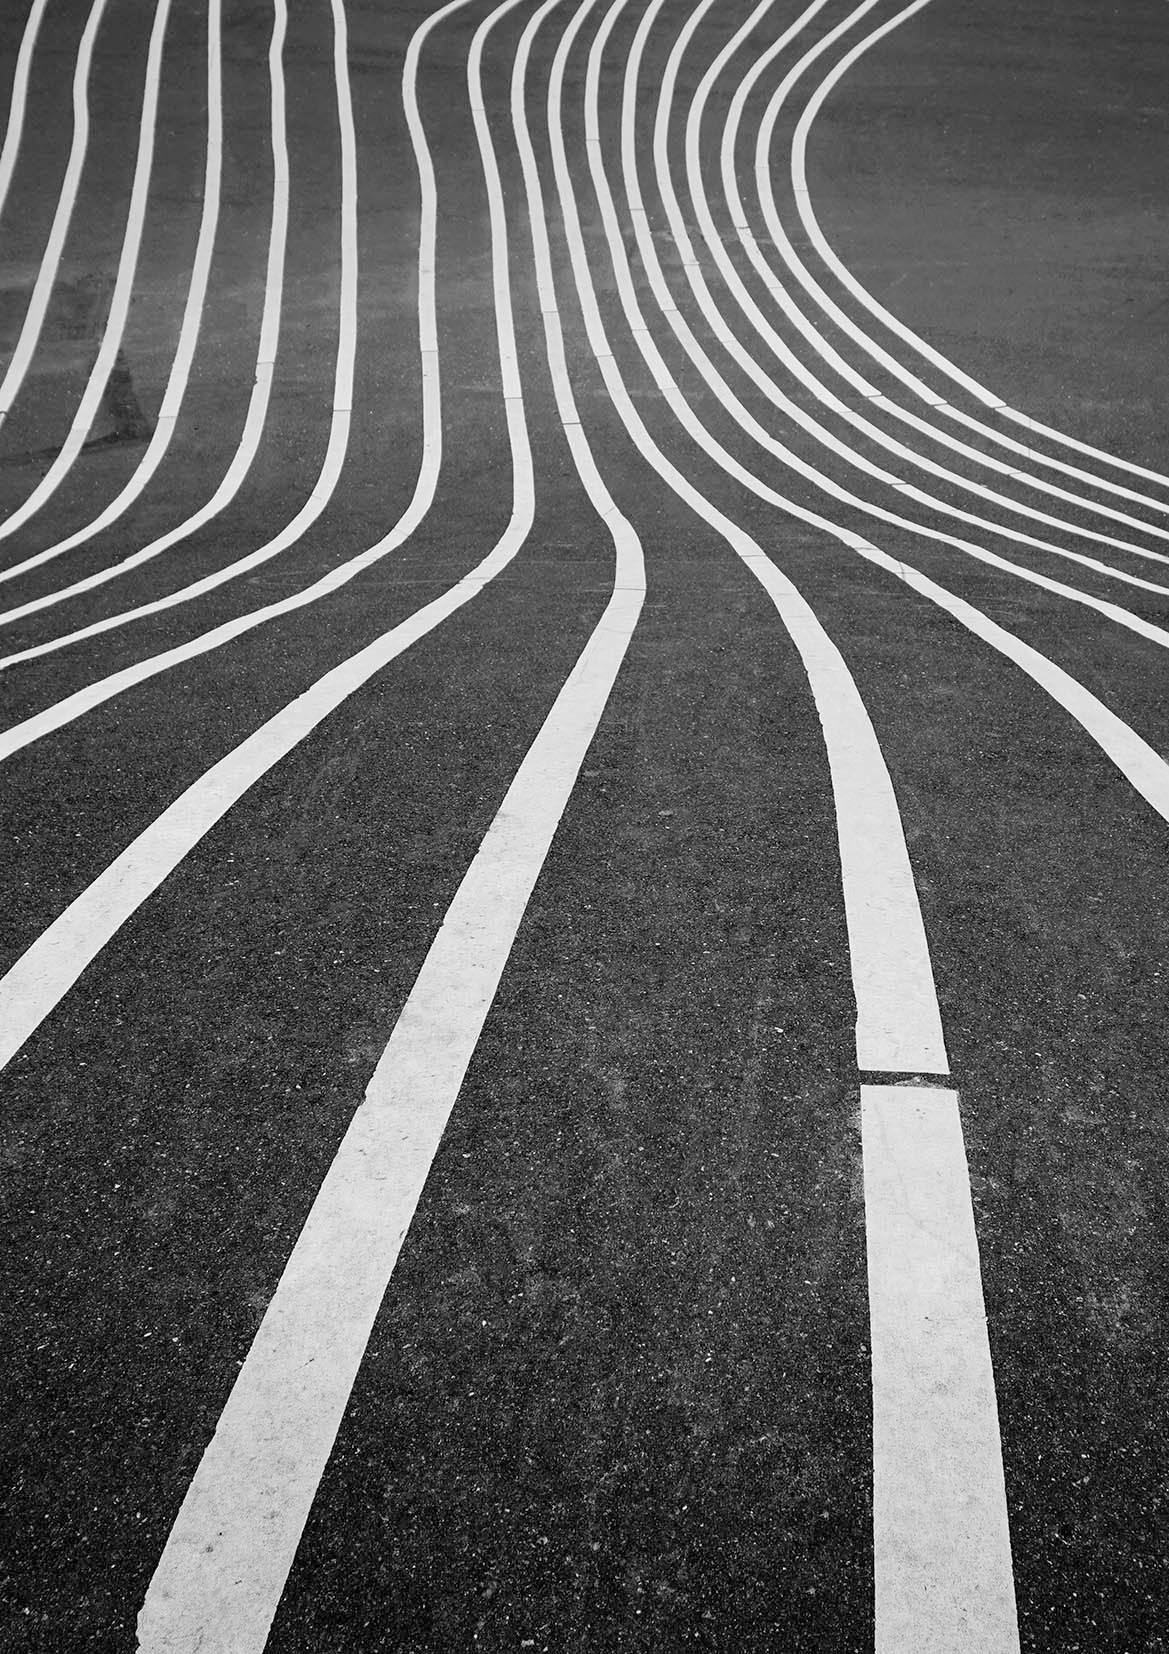 ASPHALT PRINT: Striped Road Photo Art - Pimlico Prints